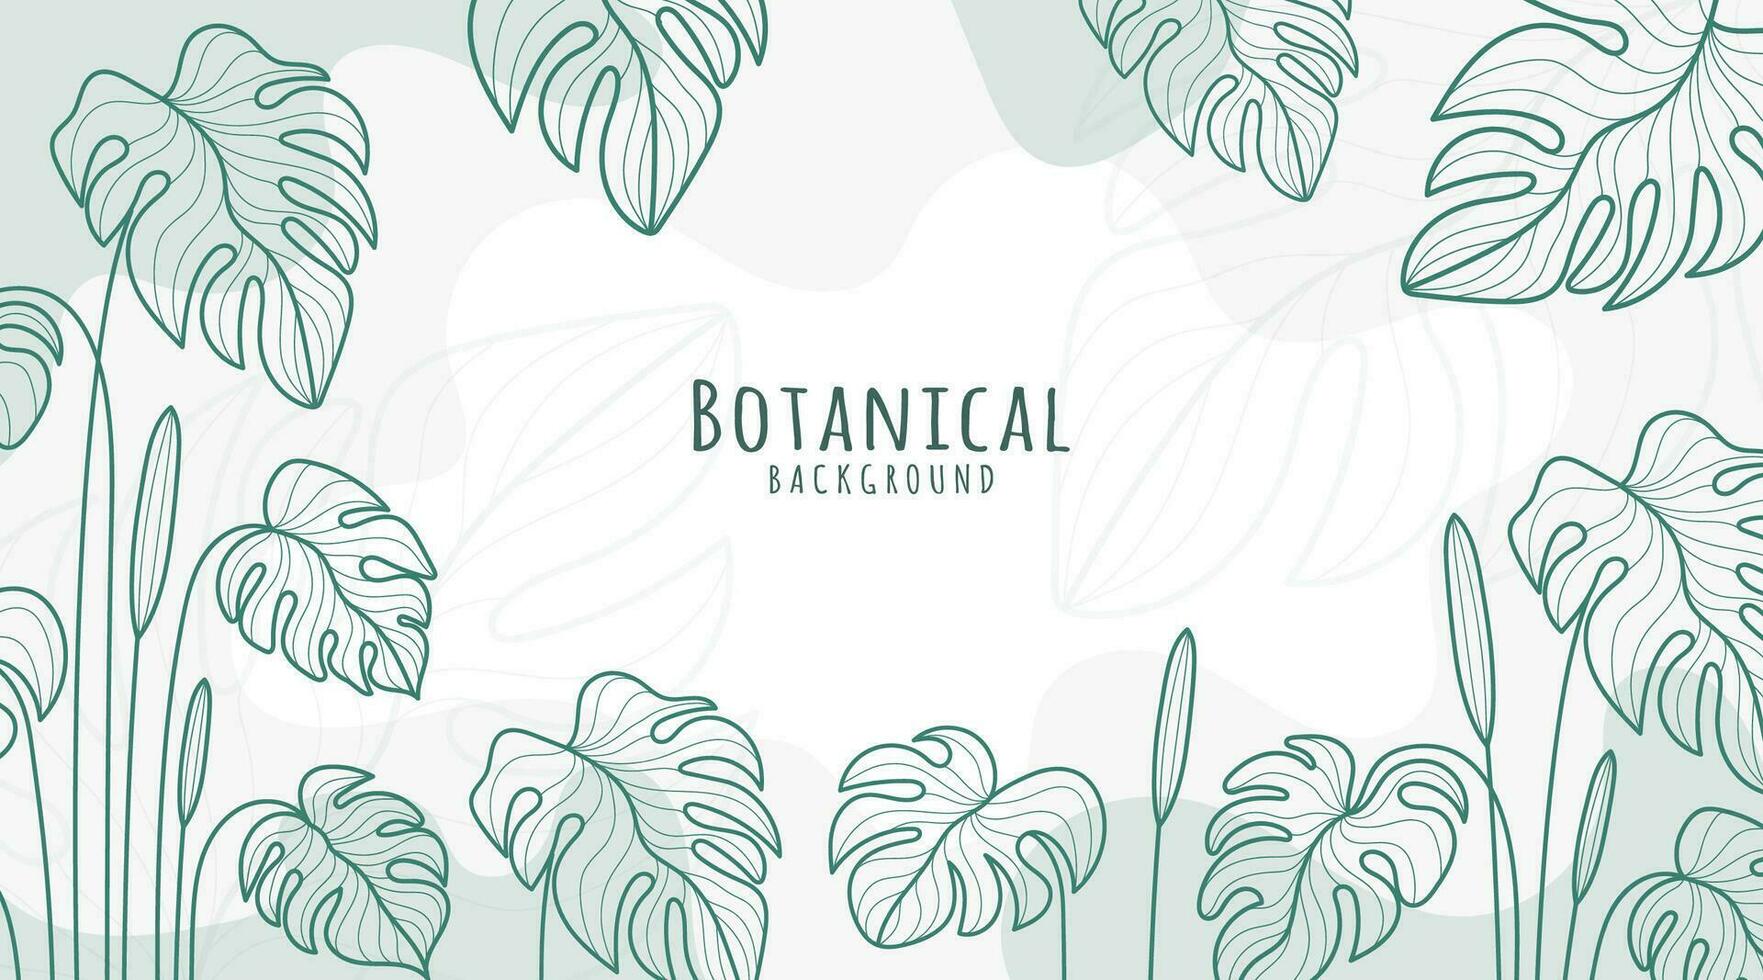 Botanical Line Art Background, Botanical Background, Leaves and Flower Background vector